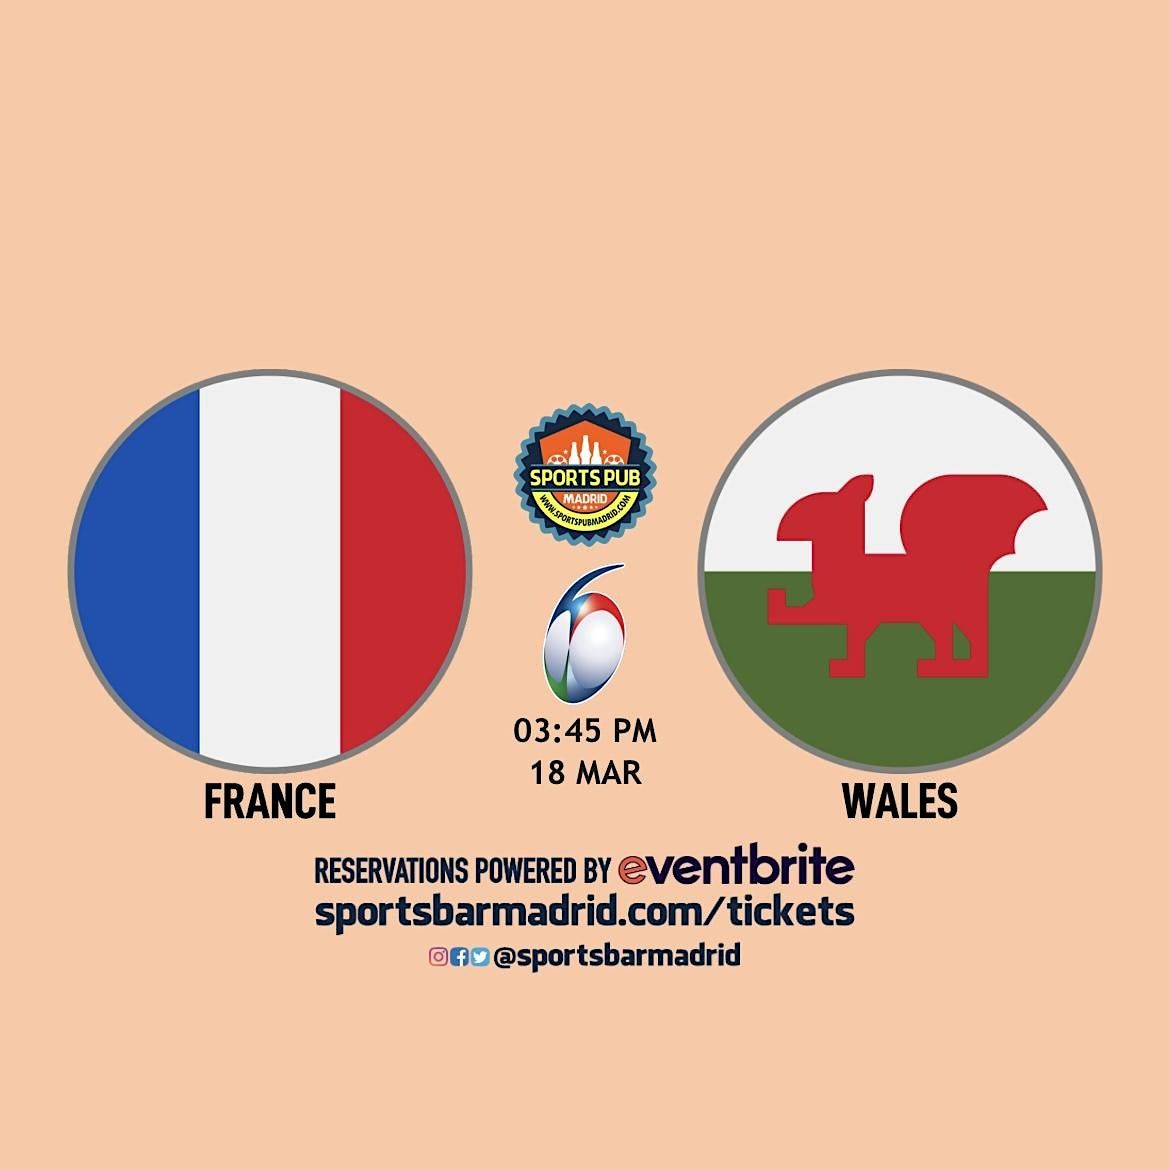 France v Wales | Rugby Six Nations - Sports Pub San Mateo